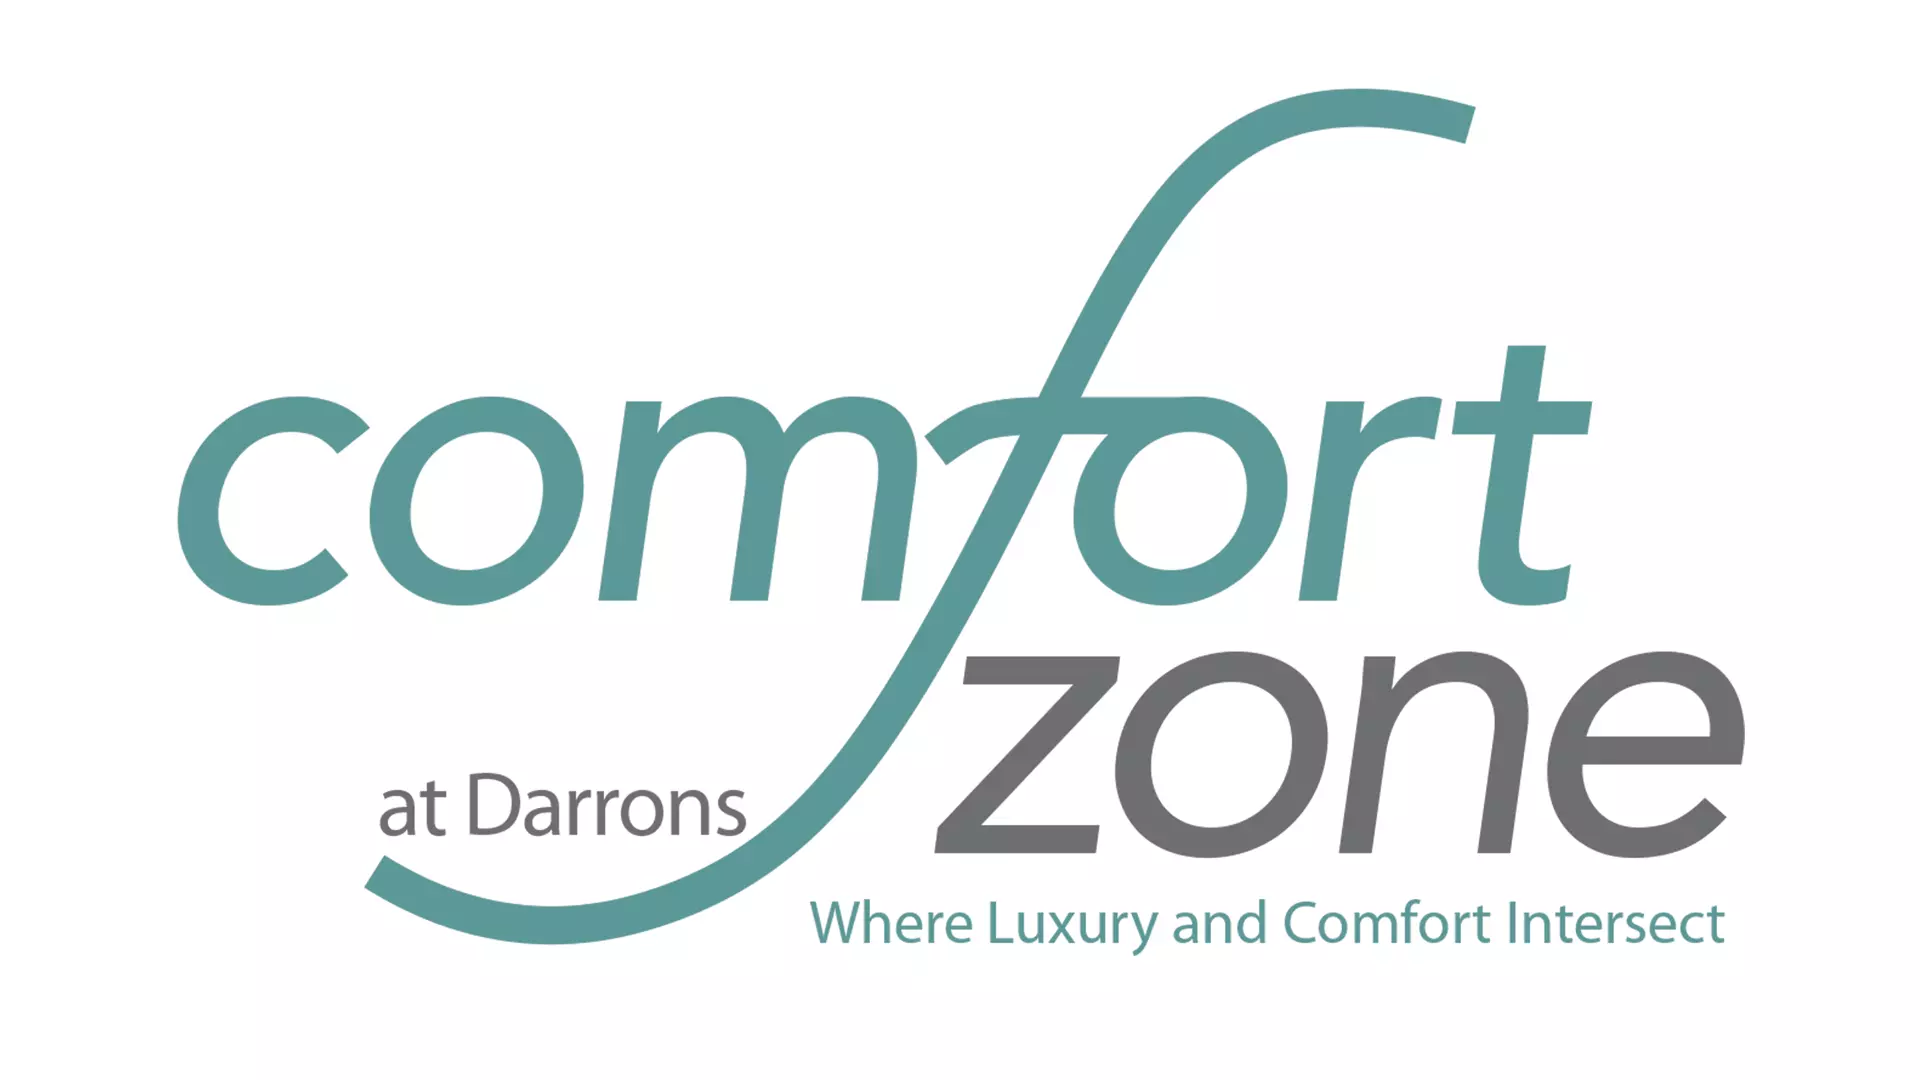 Darrons Comfort Zone Logo Identity